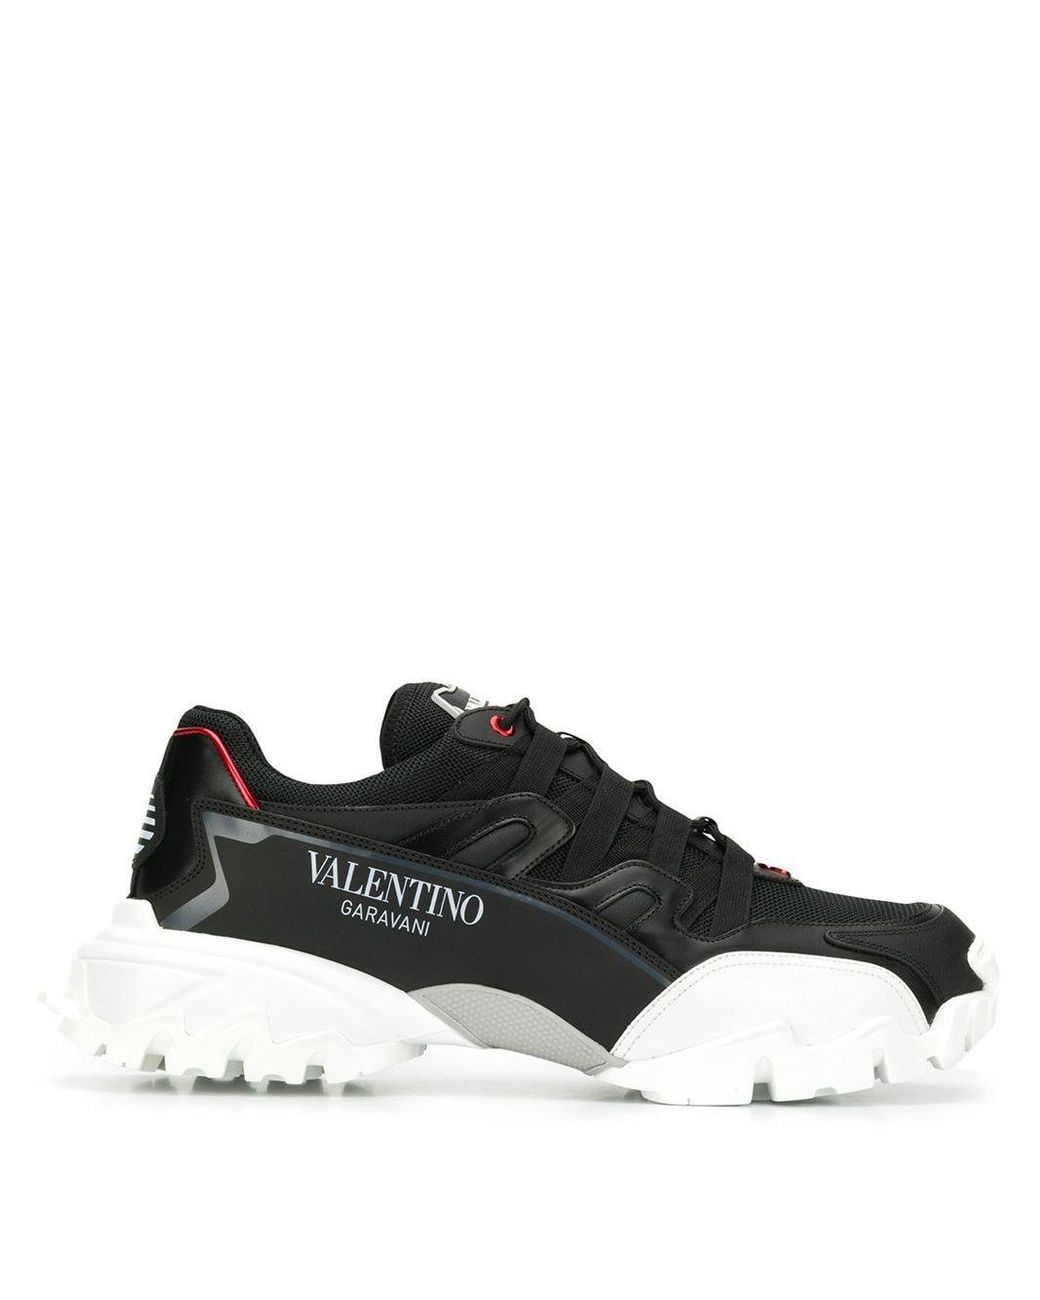 Valentino Garavani Climber Leather Sneakers in Black for Men - Lyst